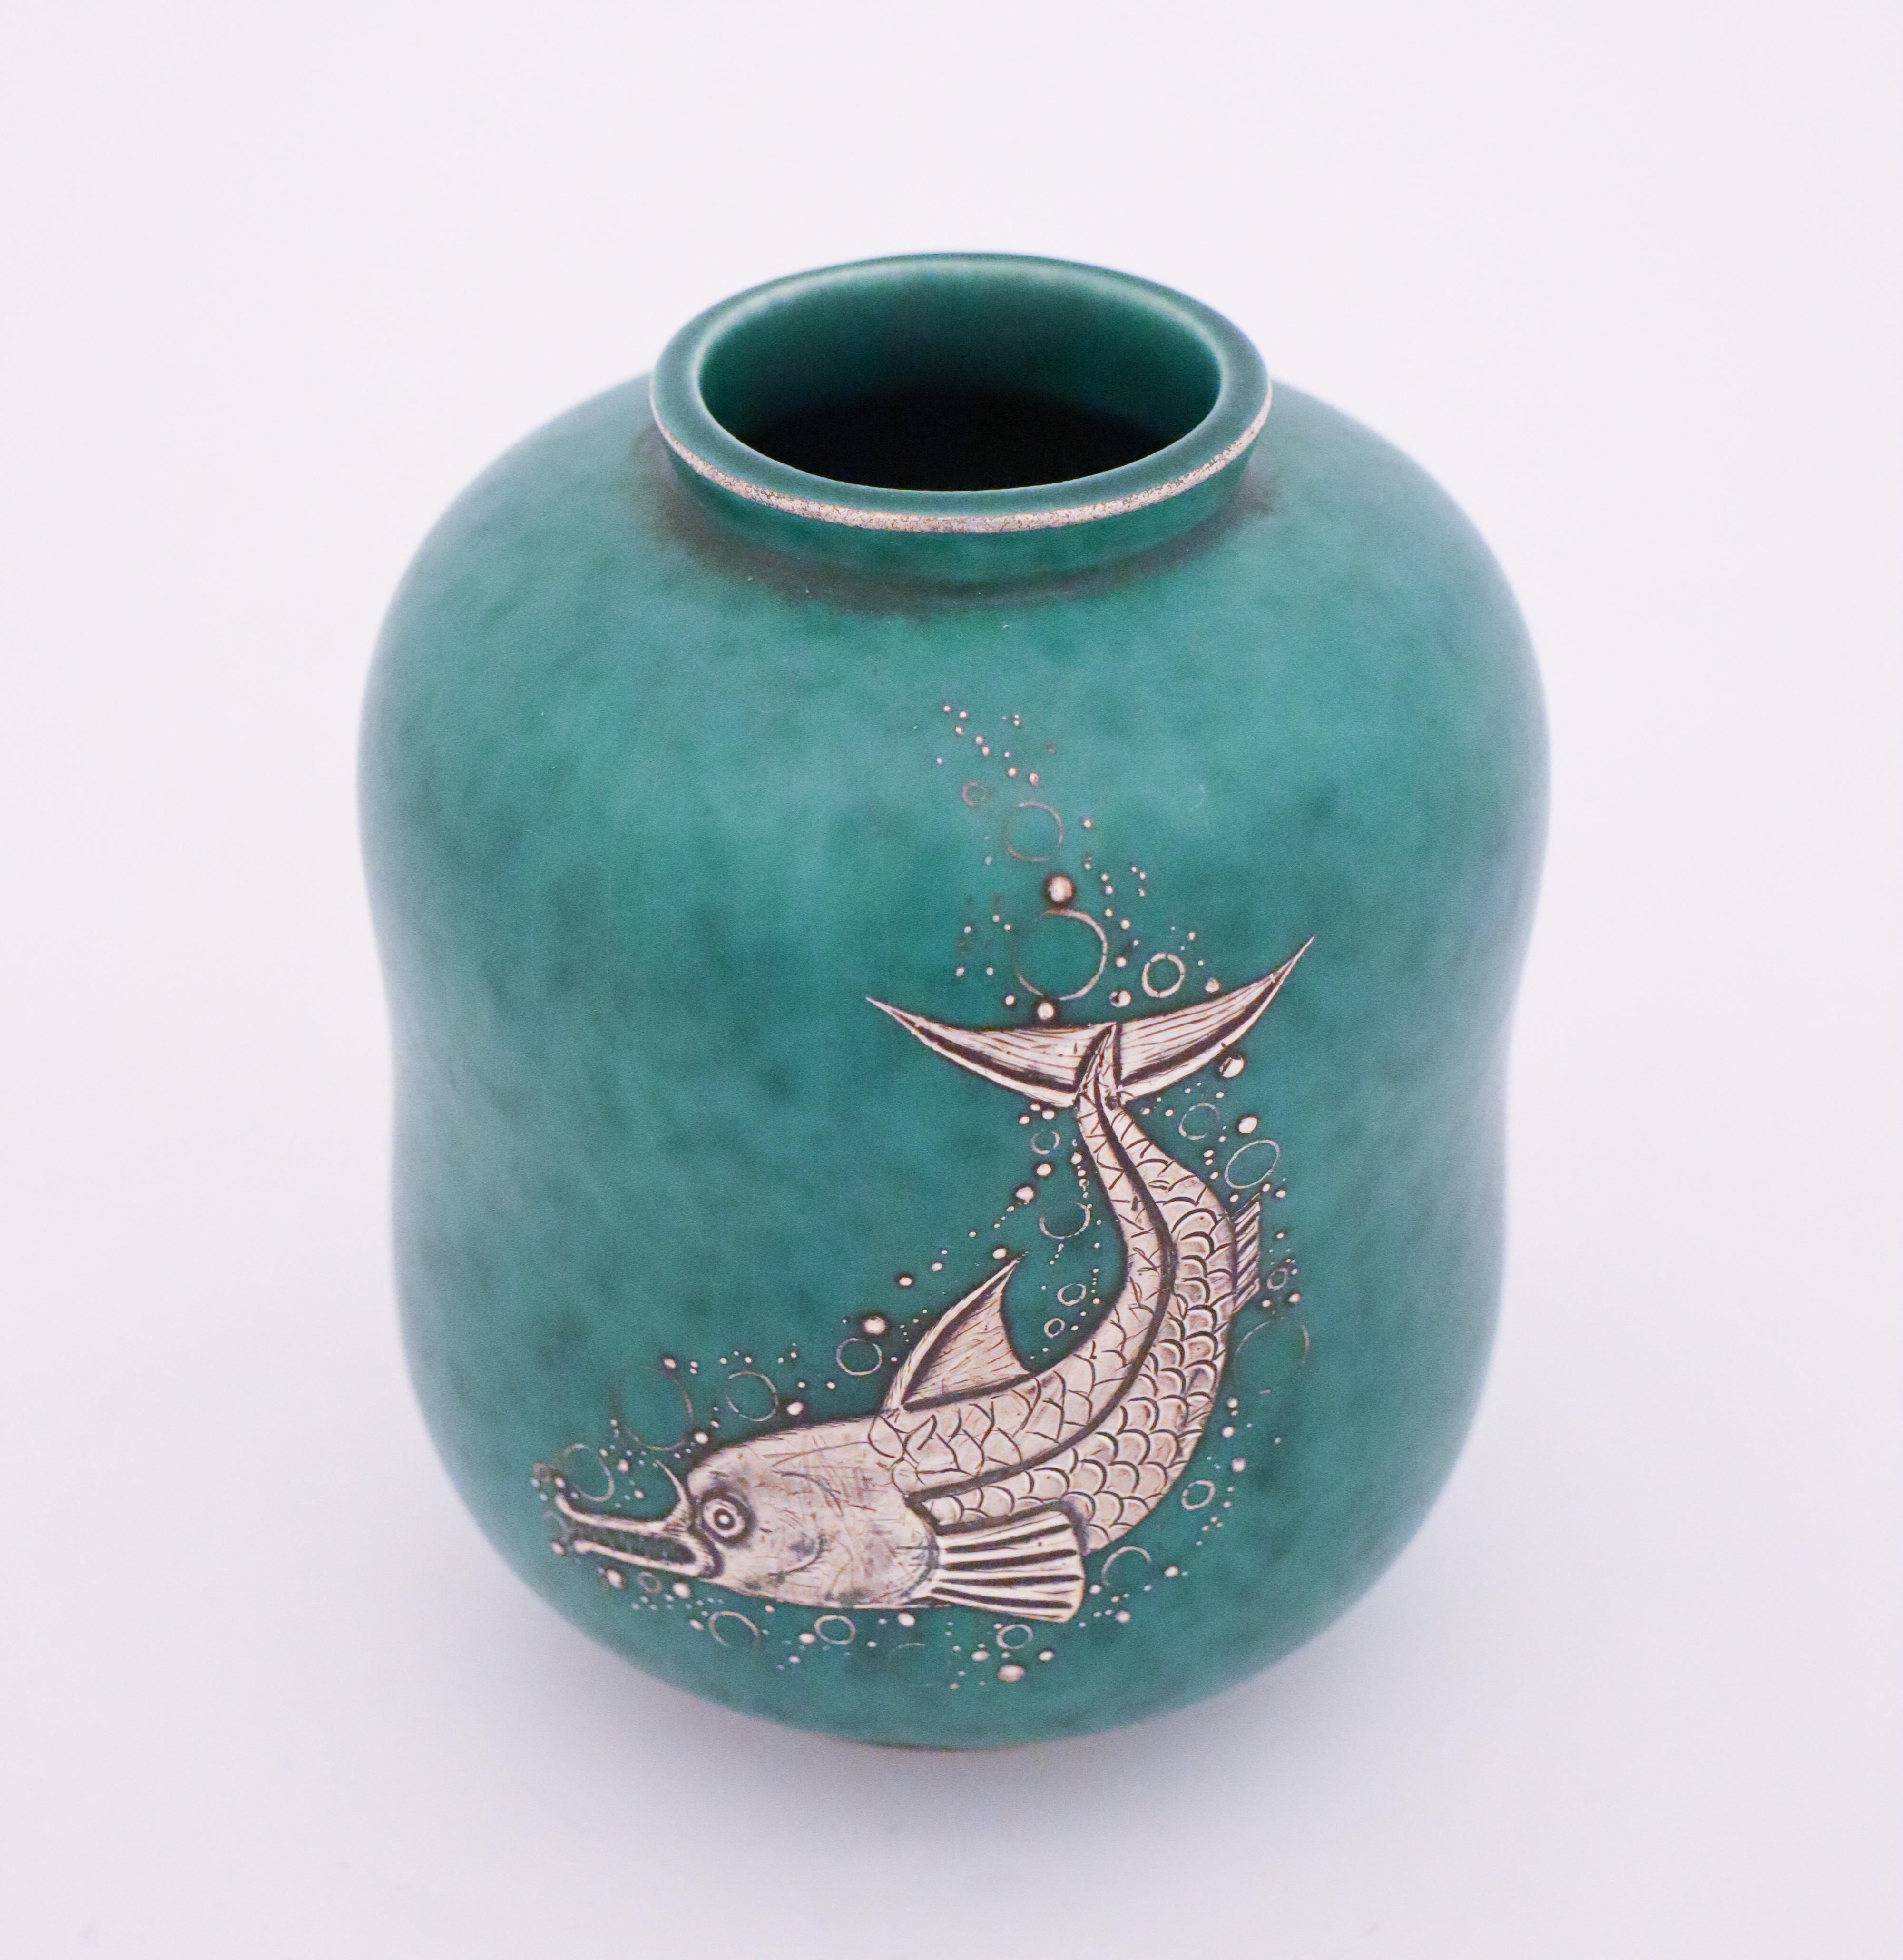 Scandinavian Modern Green Vase with Silver Decor of a Fish, Argenta, Wilhelm Kåge Gustavsberg, 1930s